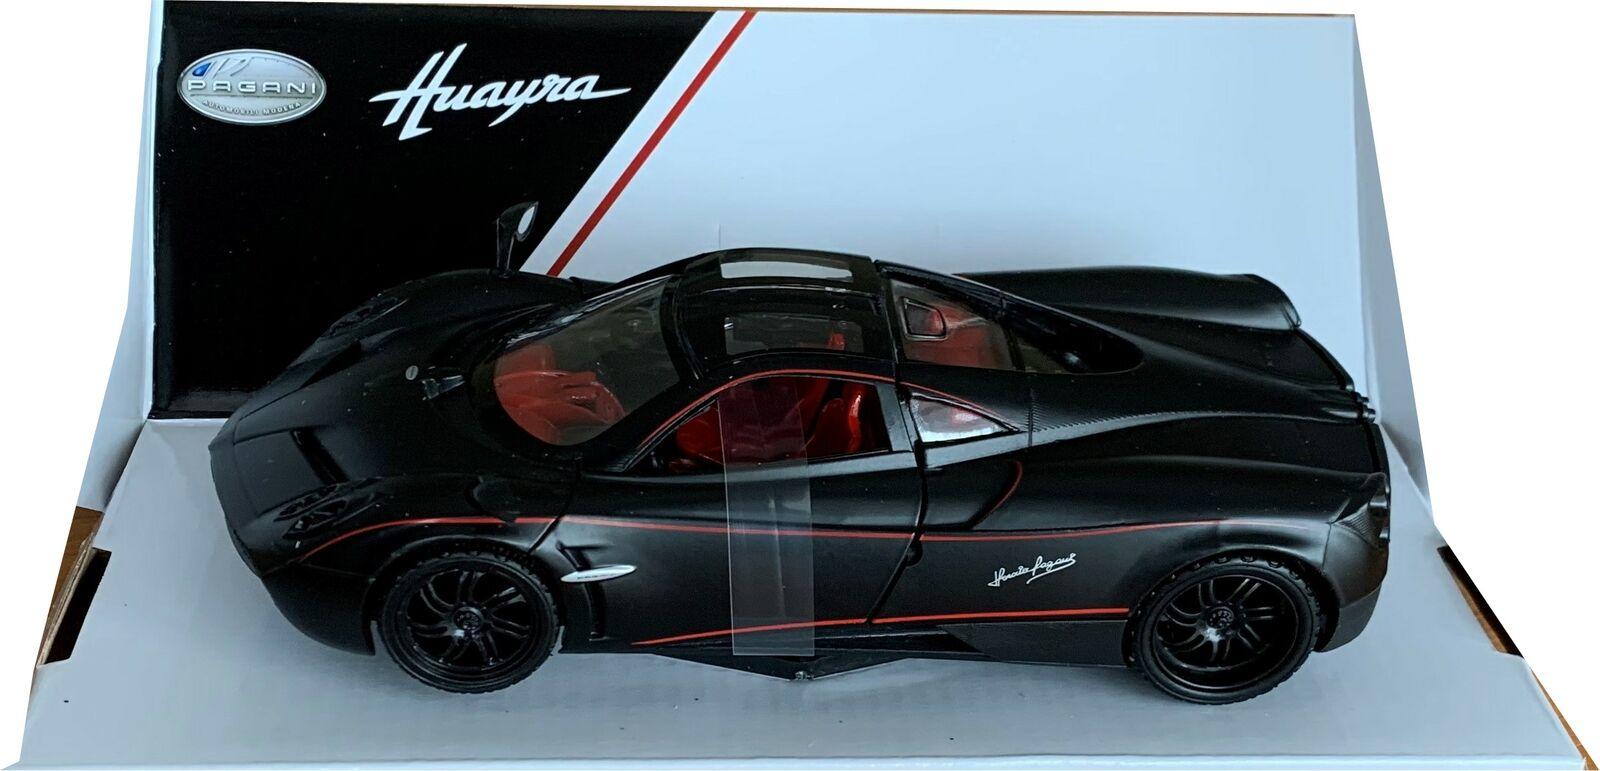 Pagani Huayra in matt black 1:24 scale diecast sports car model from motormax